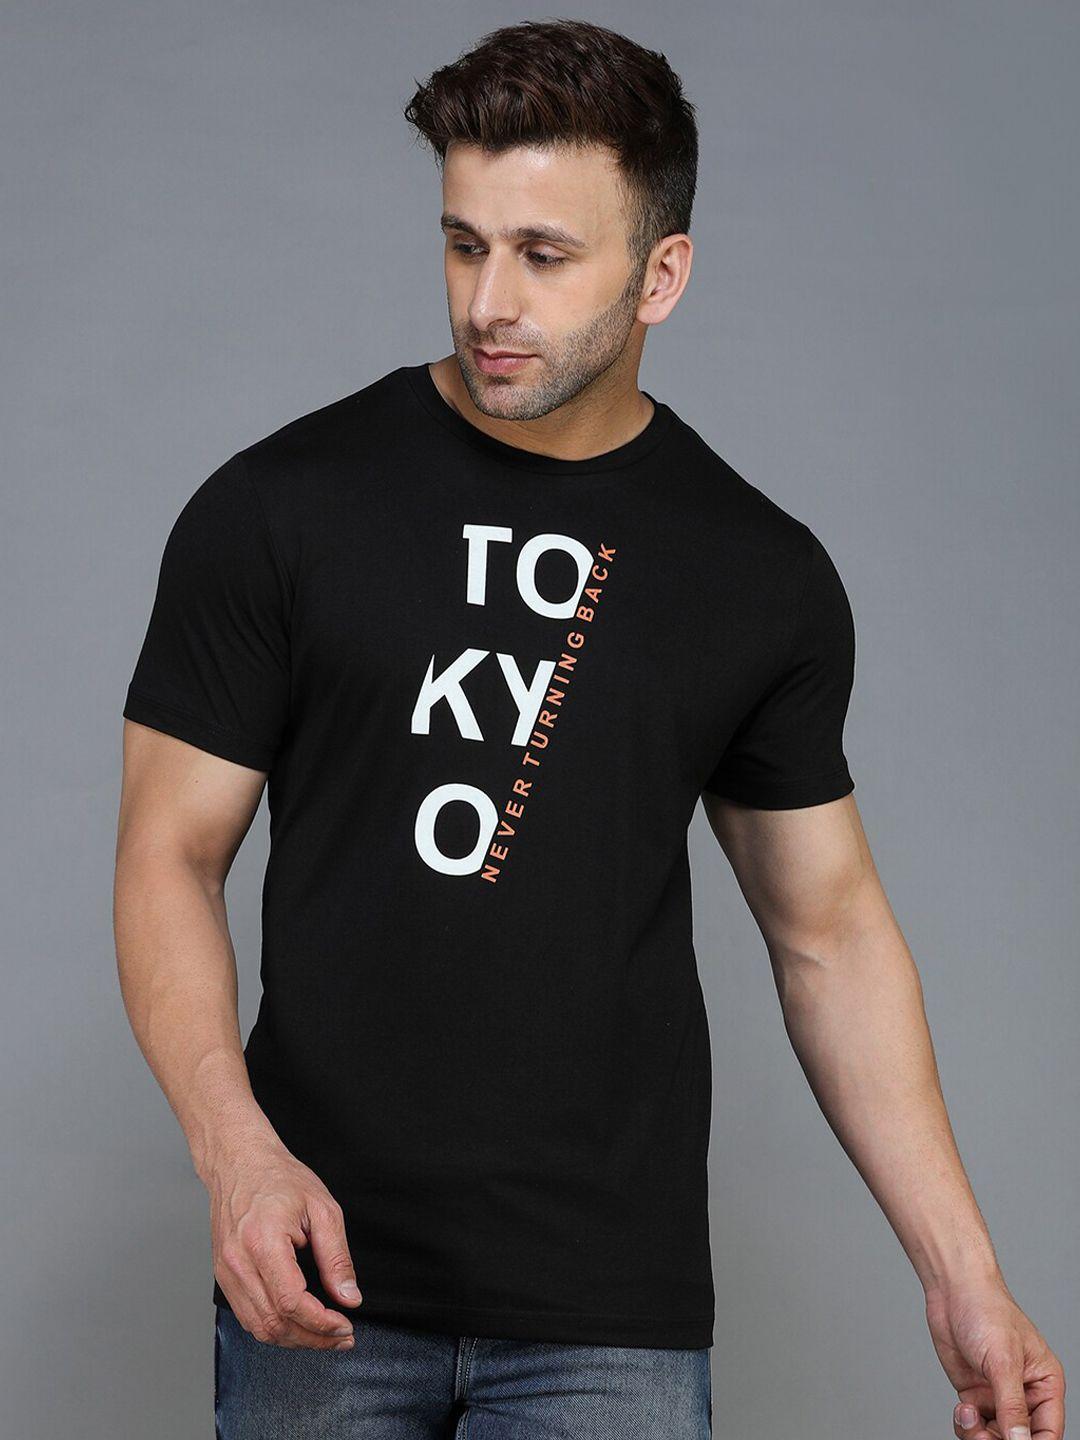 tqs men black & chinese black typography printed applique t-shirt